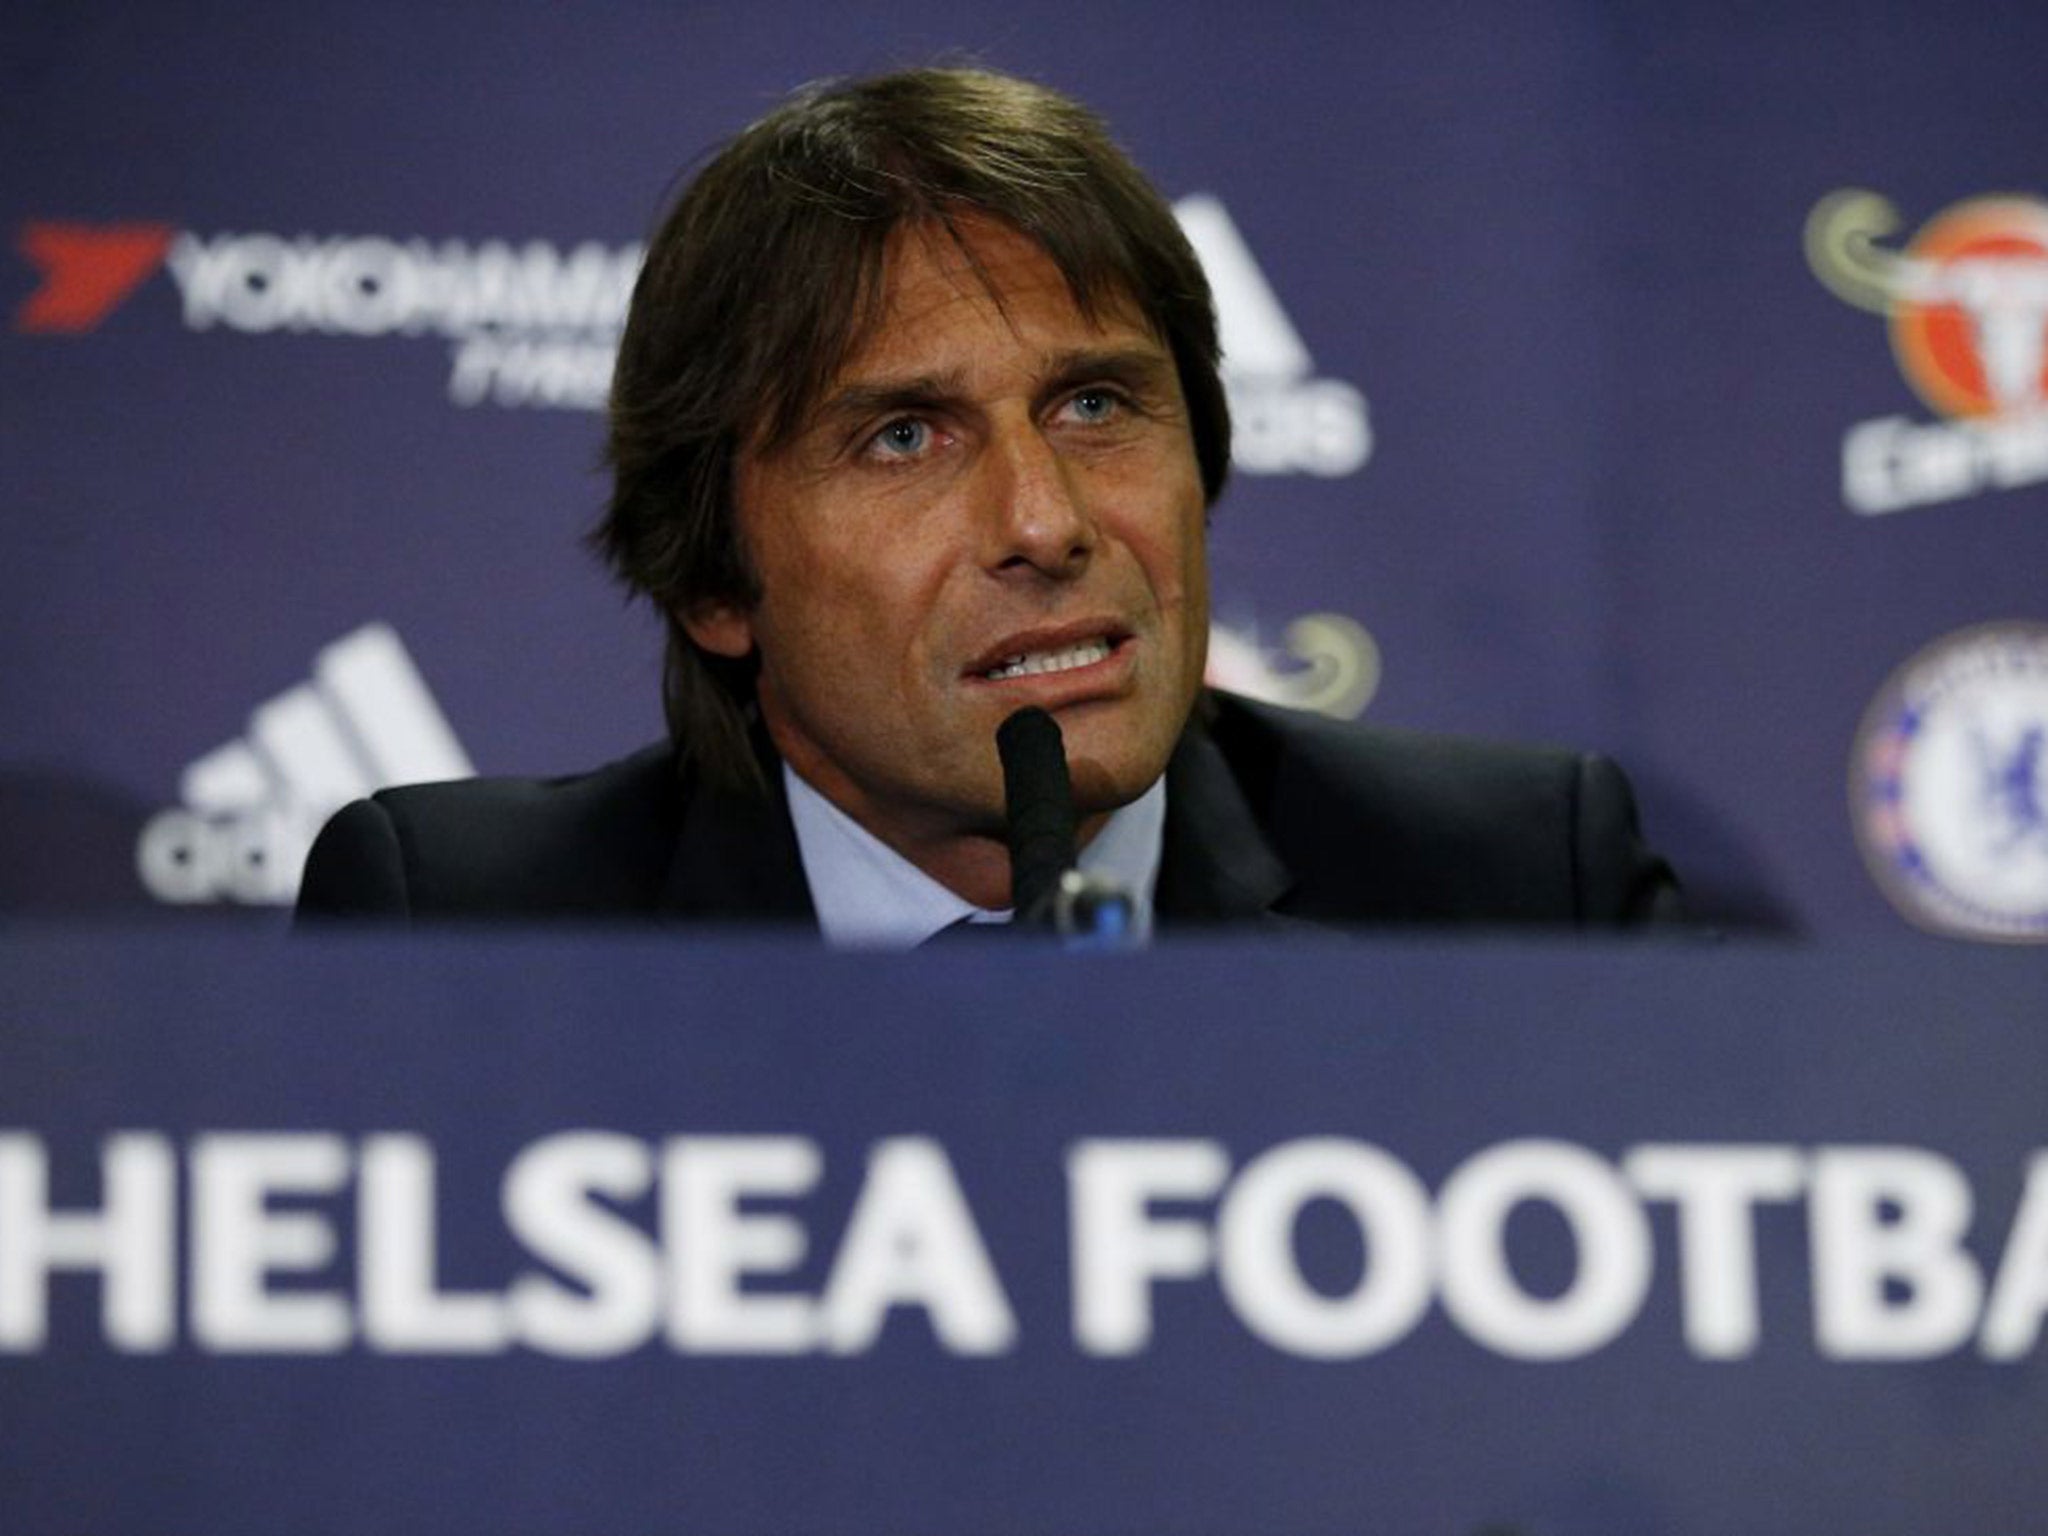 Antonio Conte speaks at a Chelsea press conference